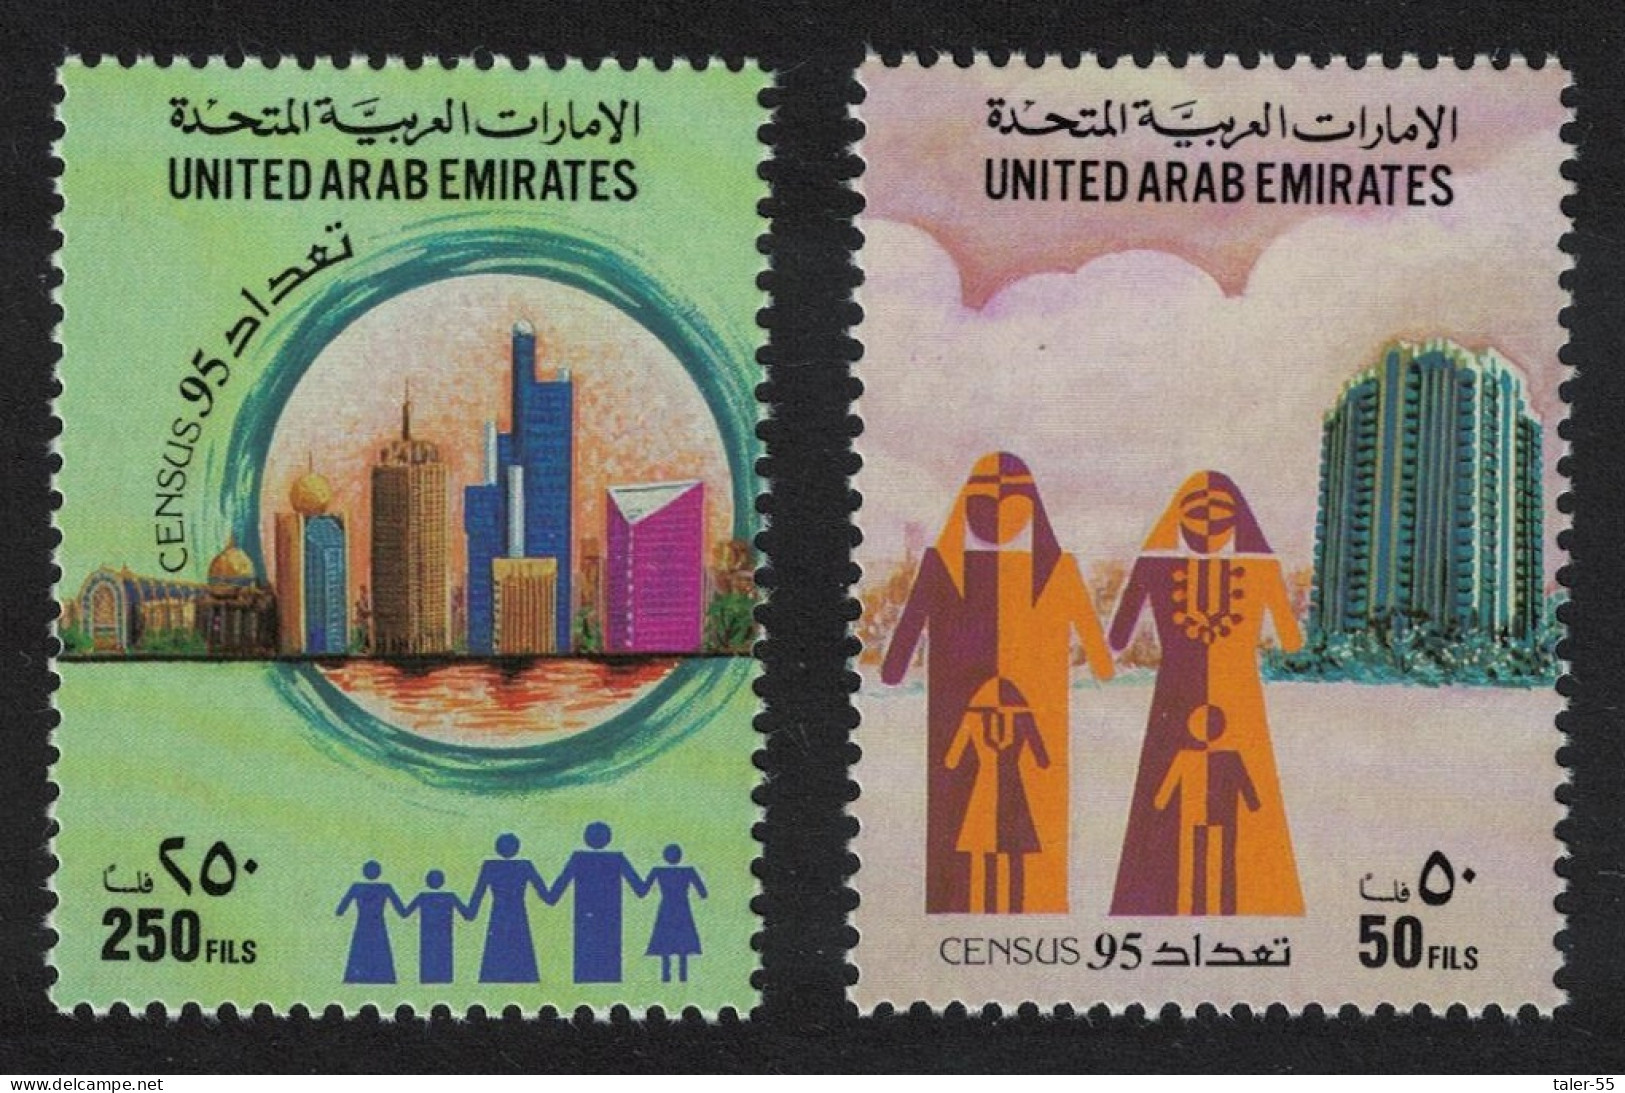 United Arab Emirates Population And Housing Census 2v 1995 MNH SG#496-497 - United Arab Emirates (General)